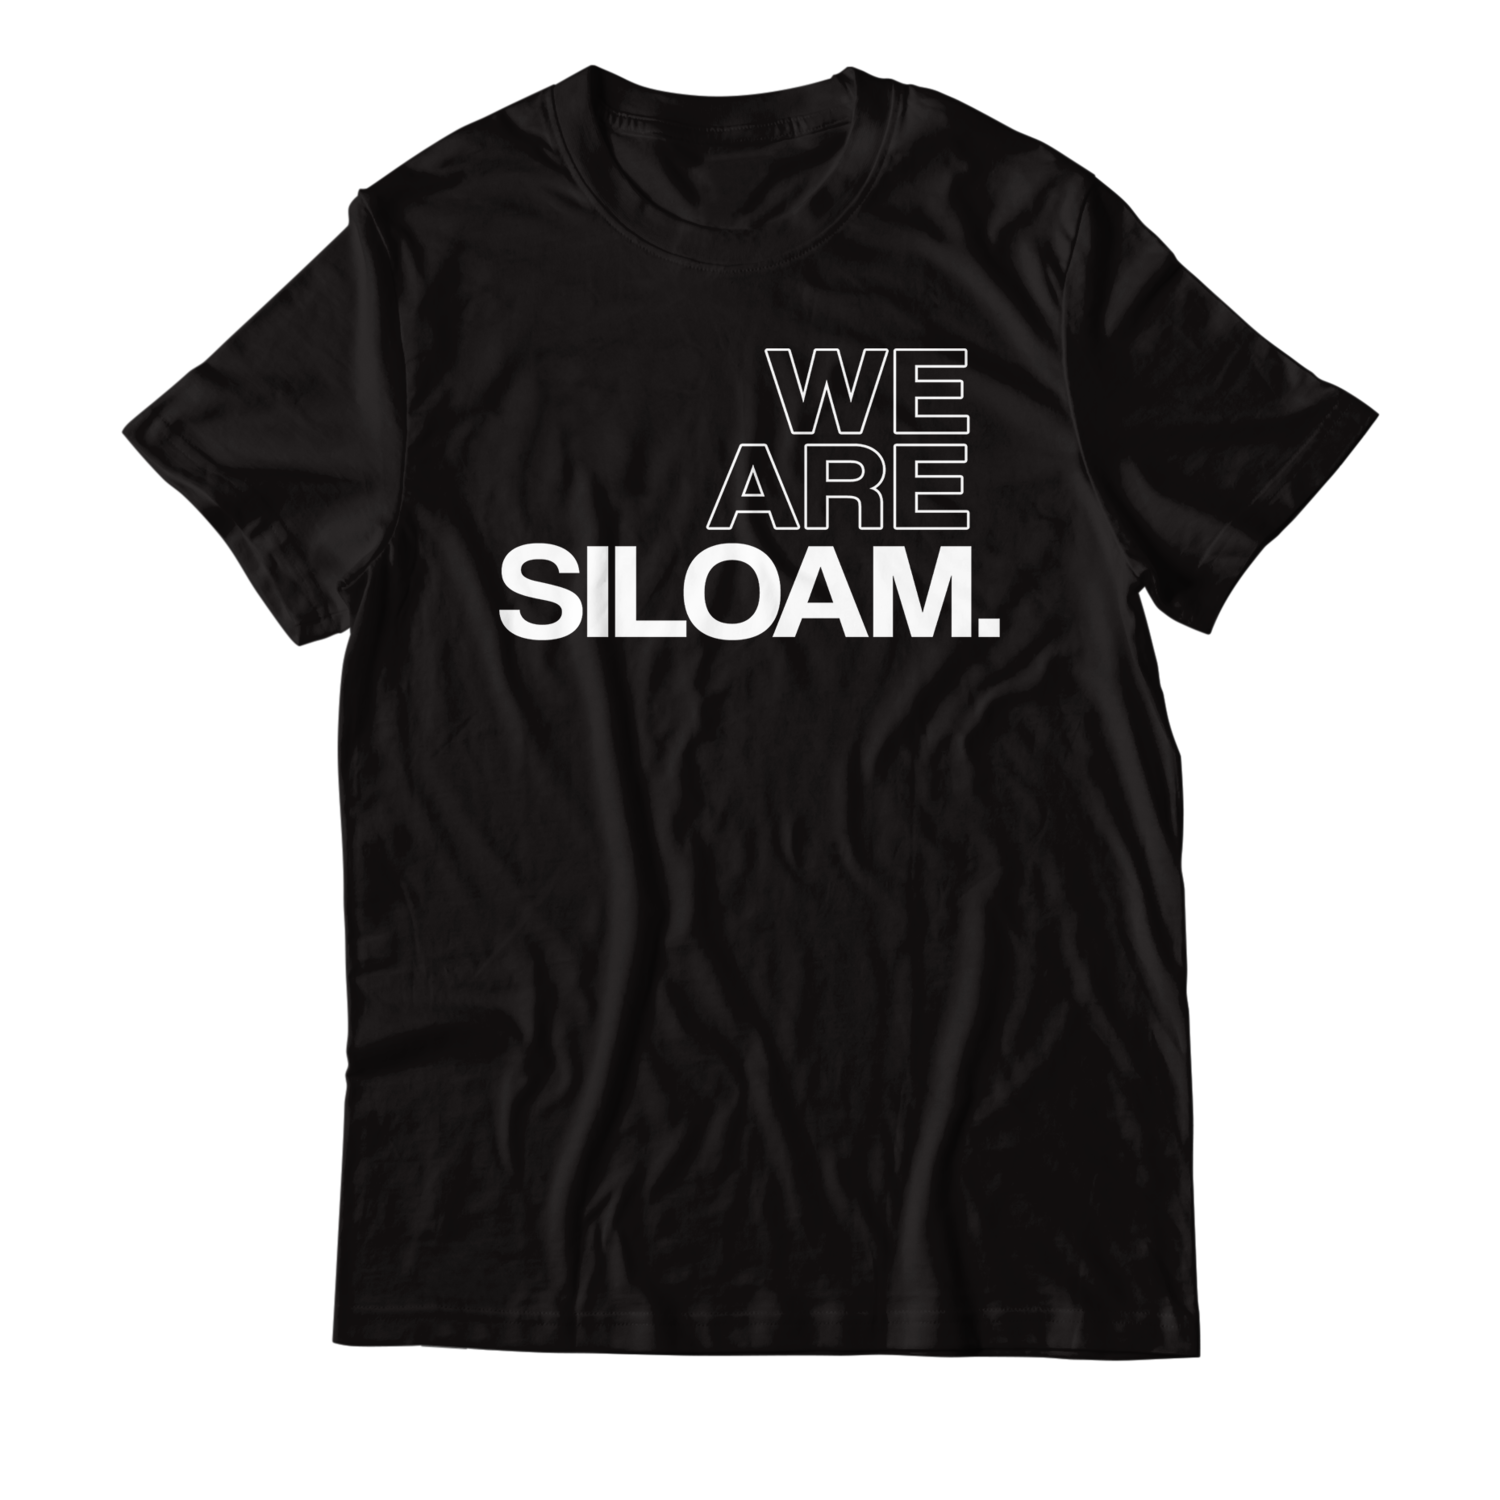 We Are Siloam T-shirt - Black & White